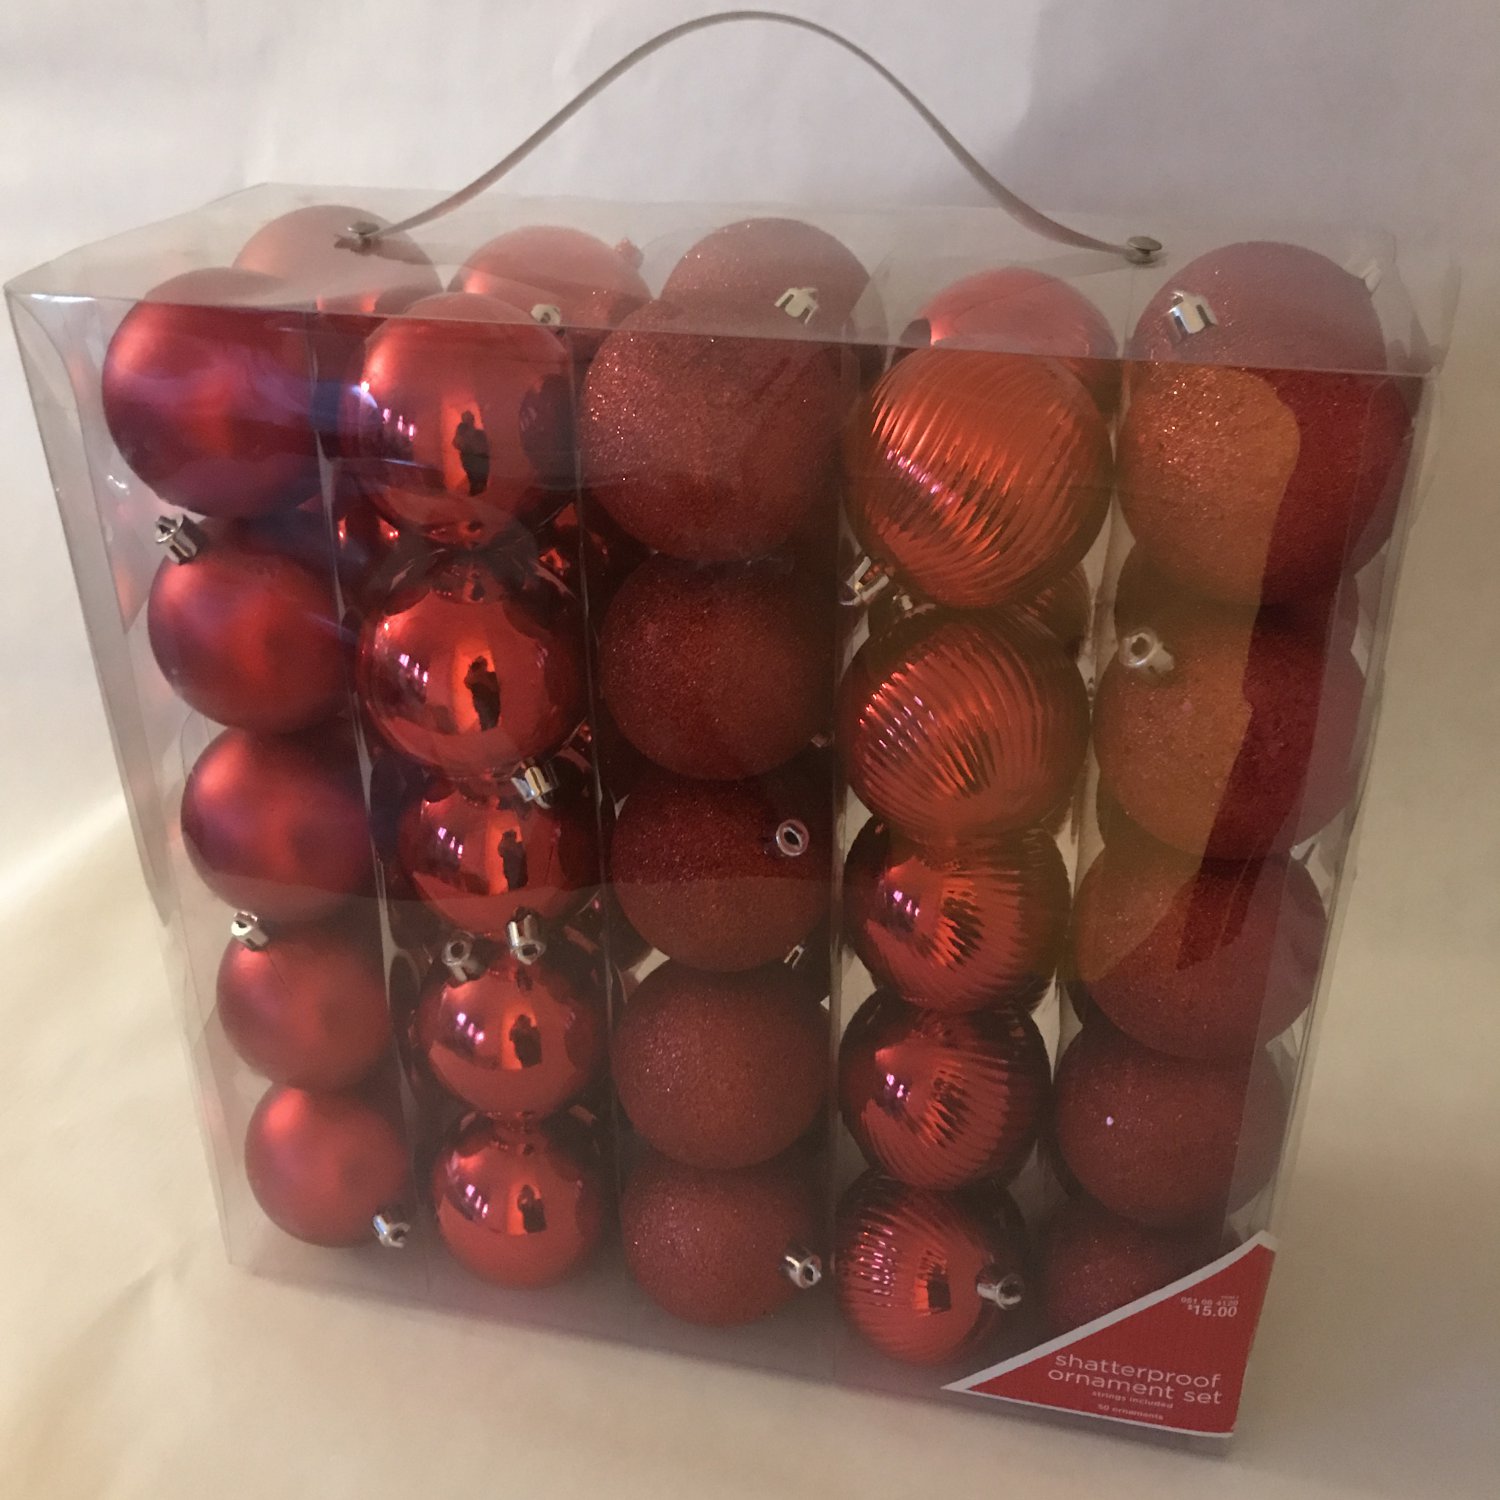 TARGET Shatterproof Decorative Christmas Balls Ornaments- 50 ct - Red ...